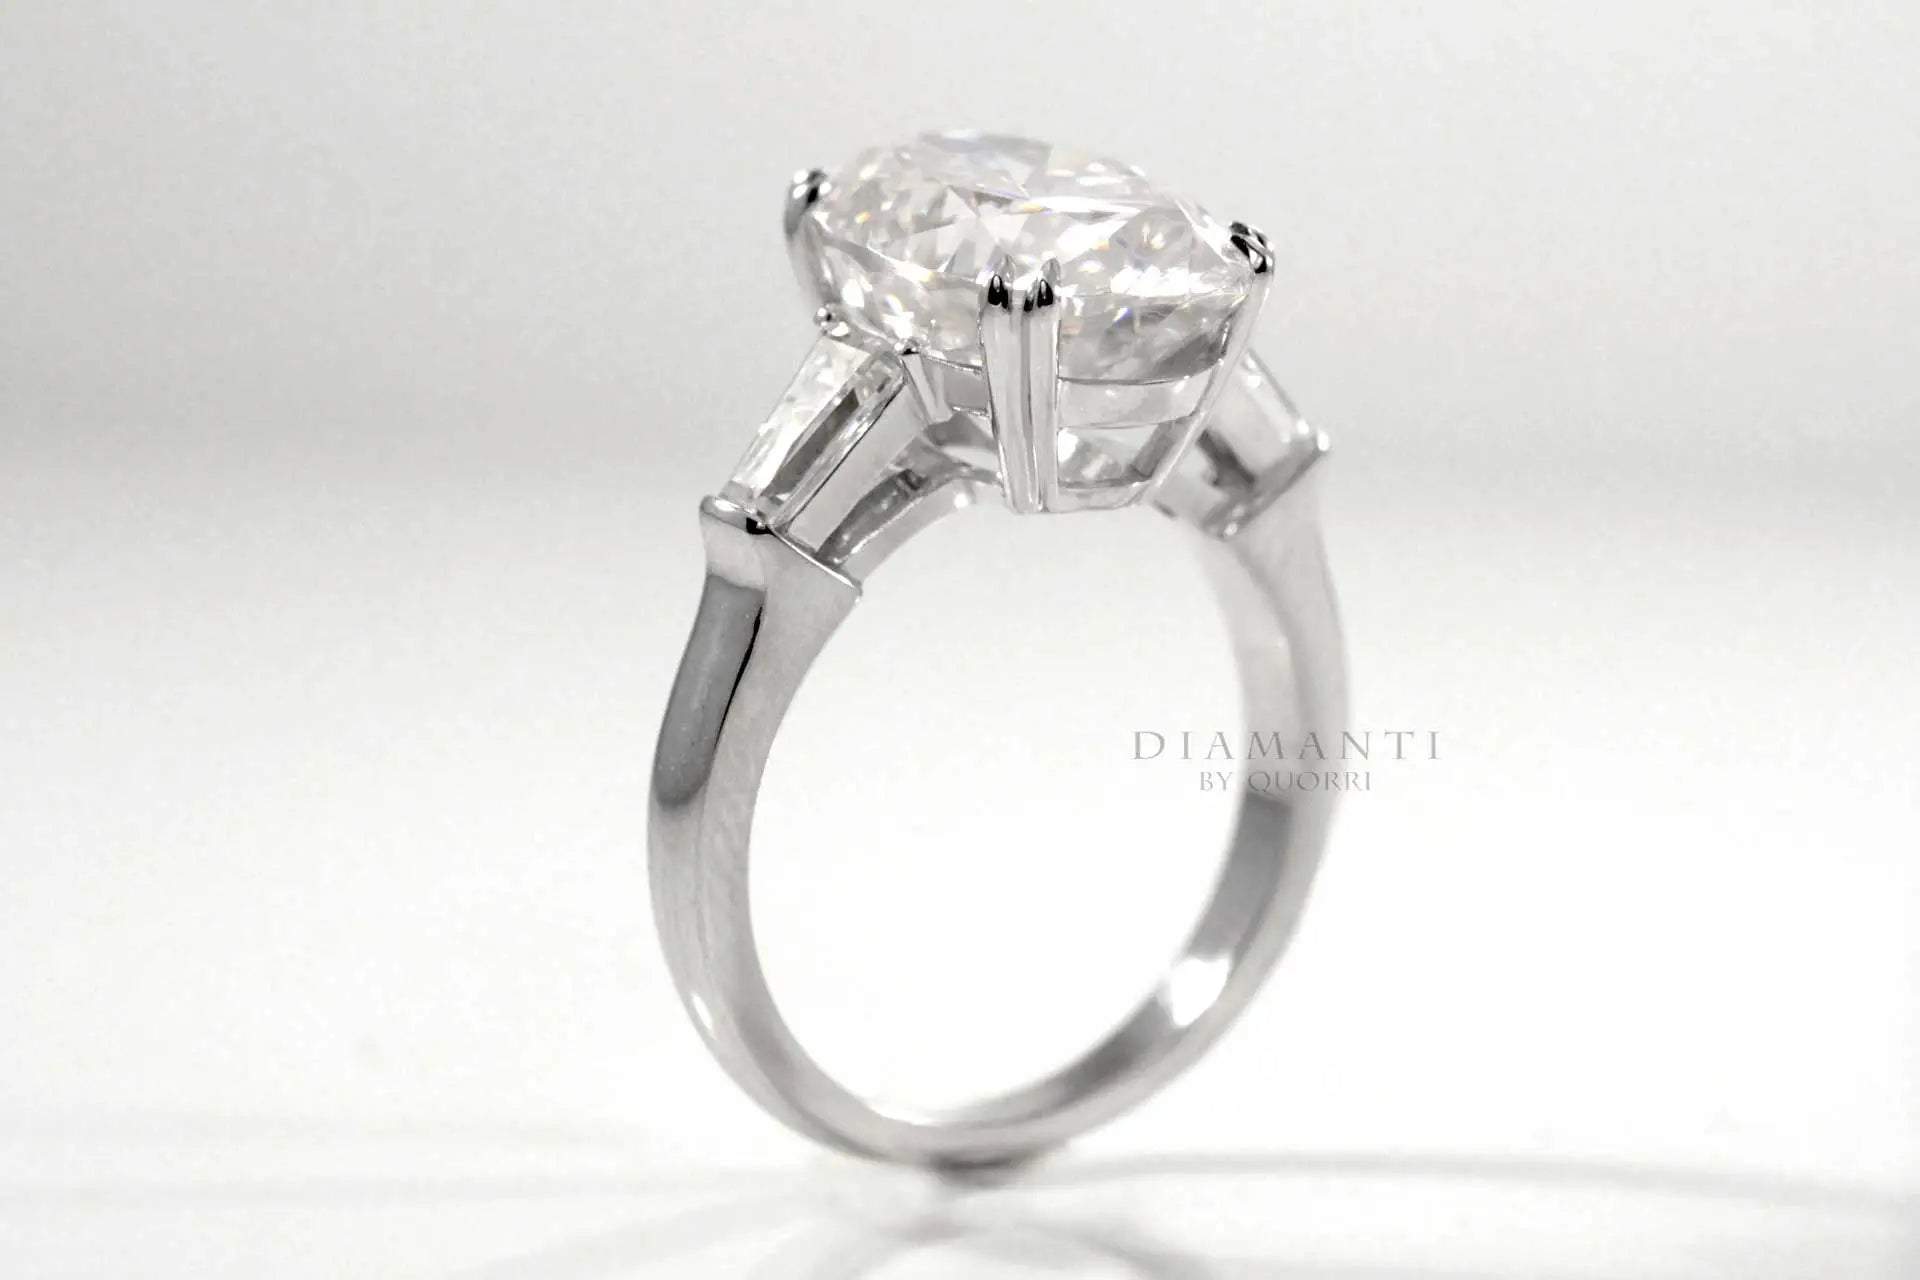 large oval three stone lab diamond engagement ring Quorri